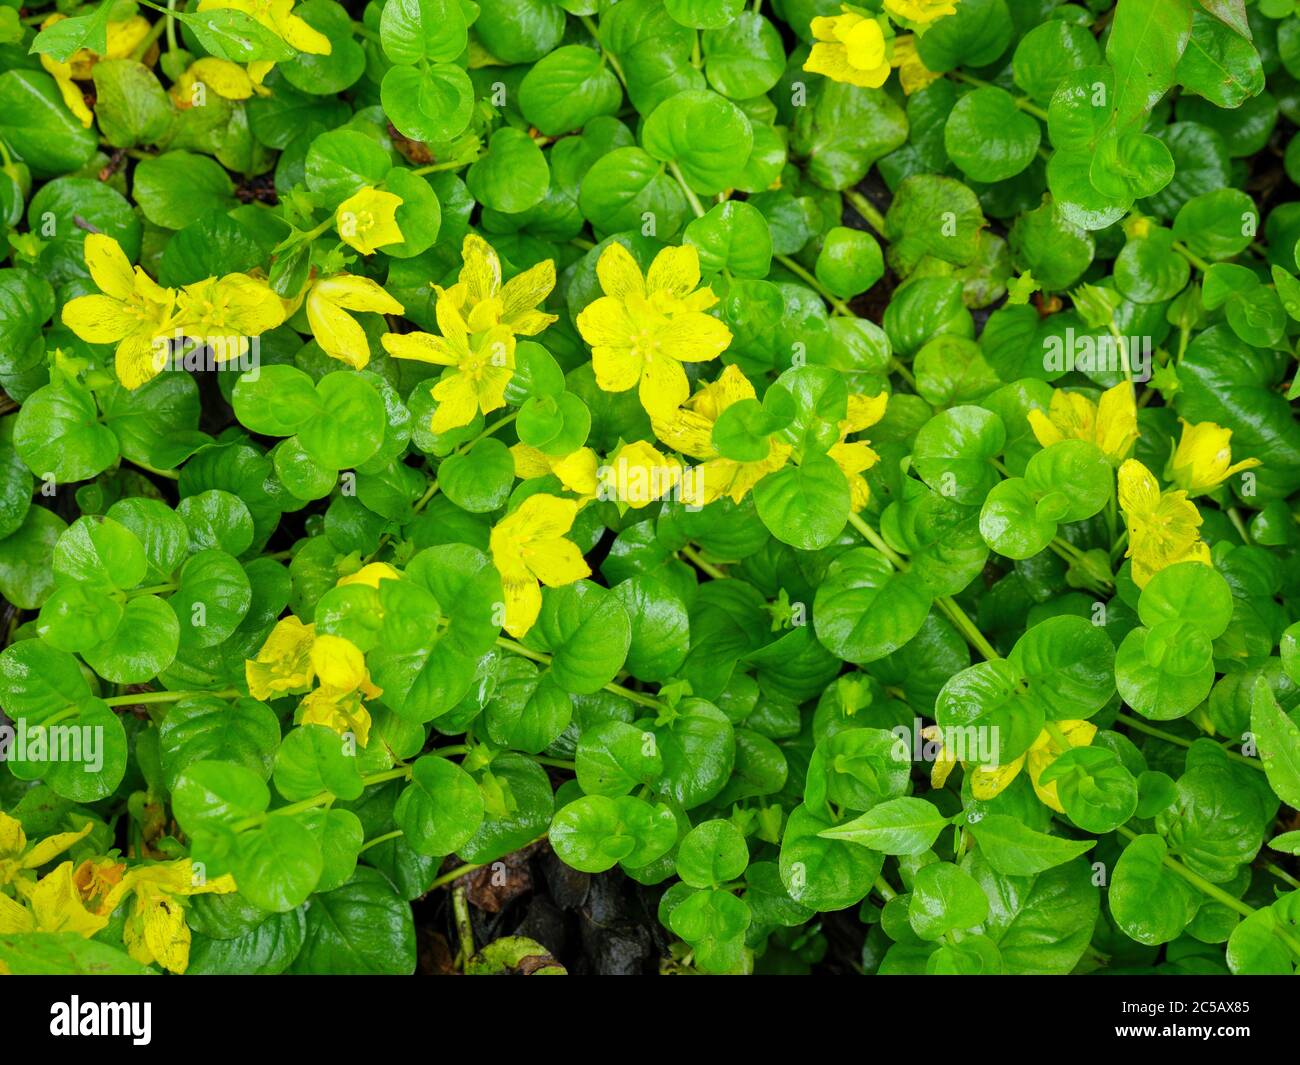 Moneywort or creeping jenny (Lysimachia nummularia), an invasive plant in North America. Salt Creek Nature Area Illinois. Stock Photo